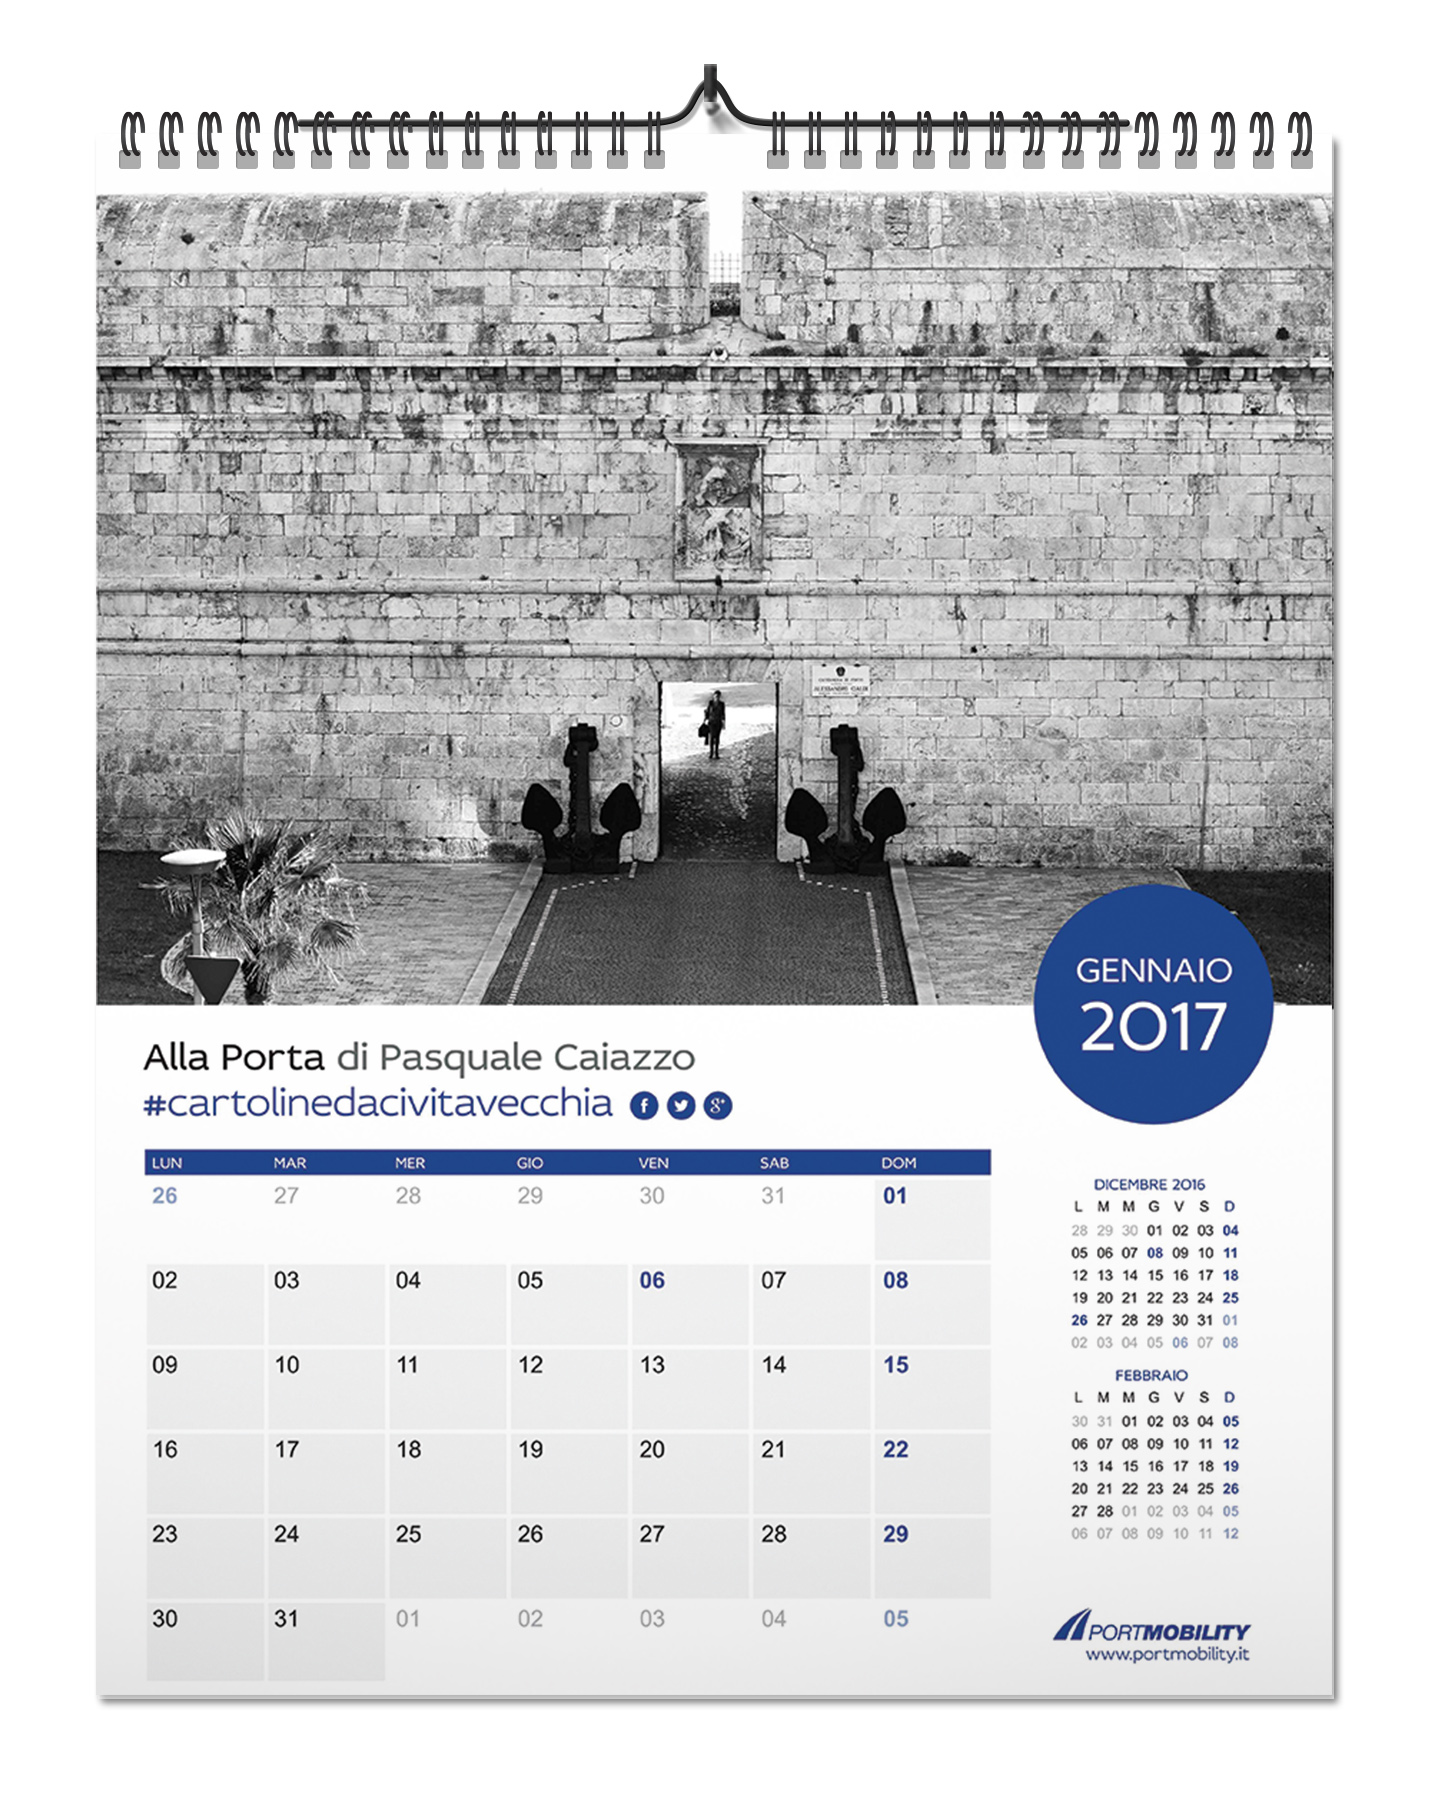 January in the Calendar 2017